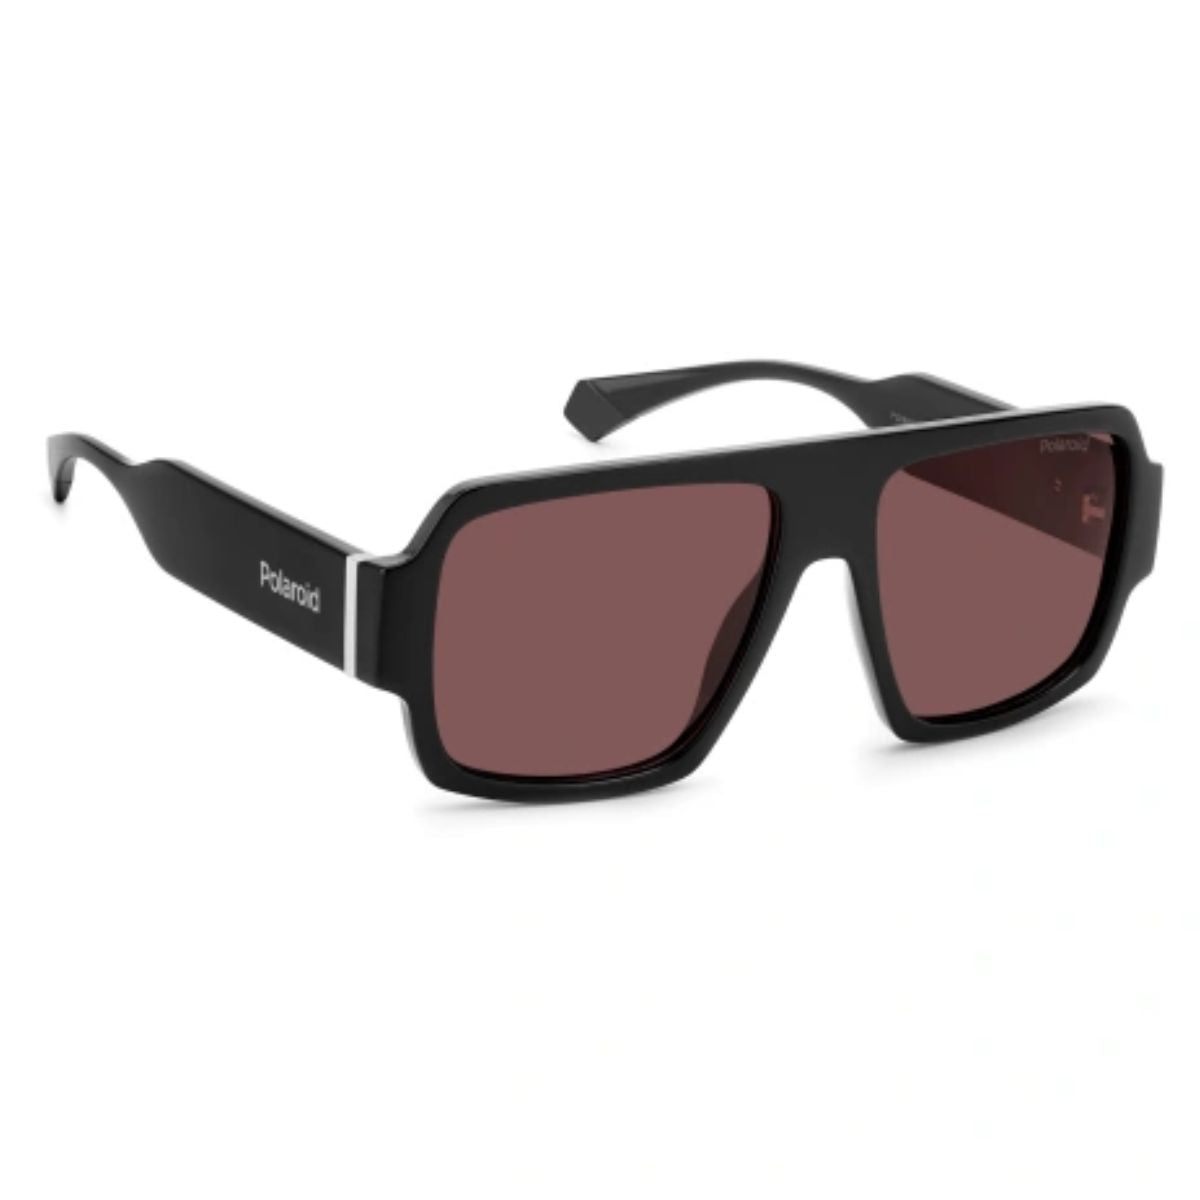 "Shop Stylish Polarized Square Sunglasses For Men's Under 7k | Optorium"